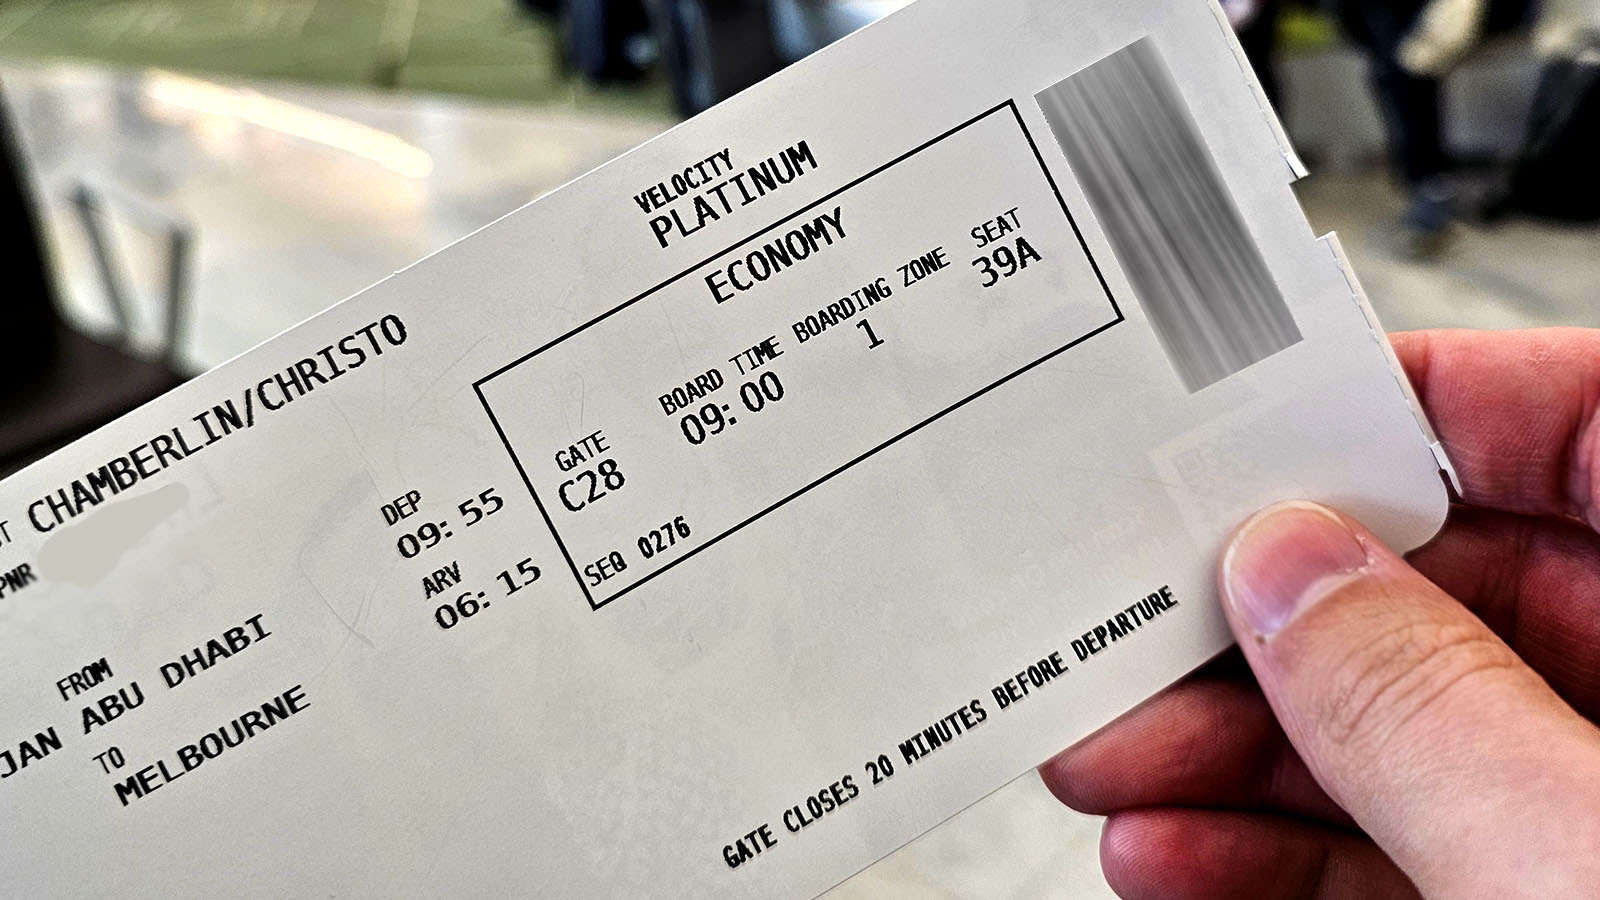 Platinum boarding pass on Etihad Airways